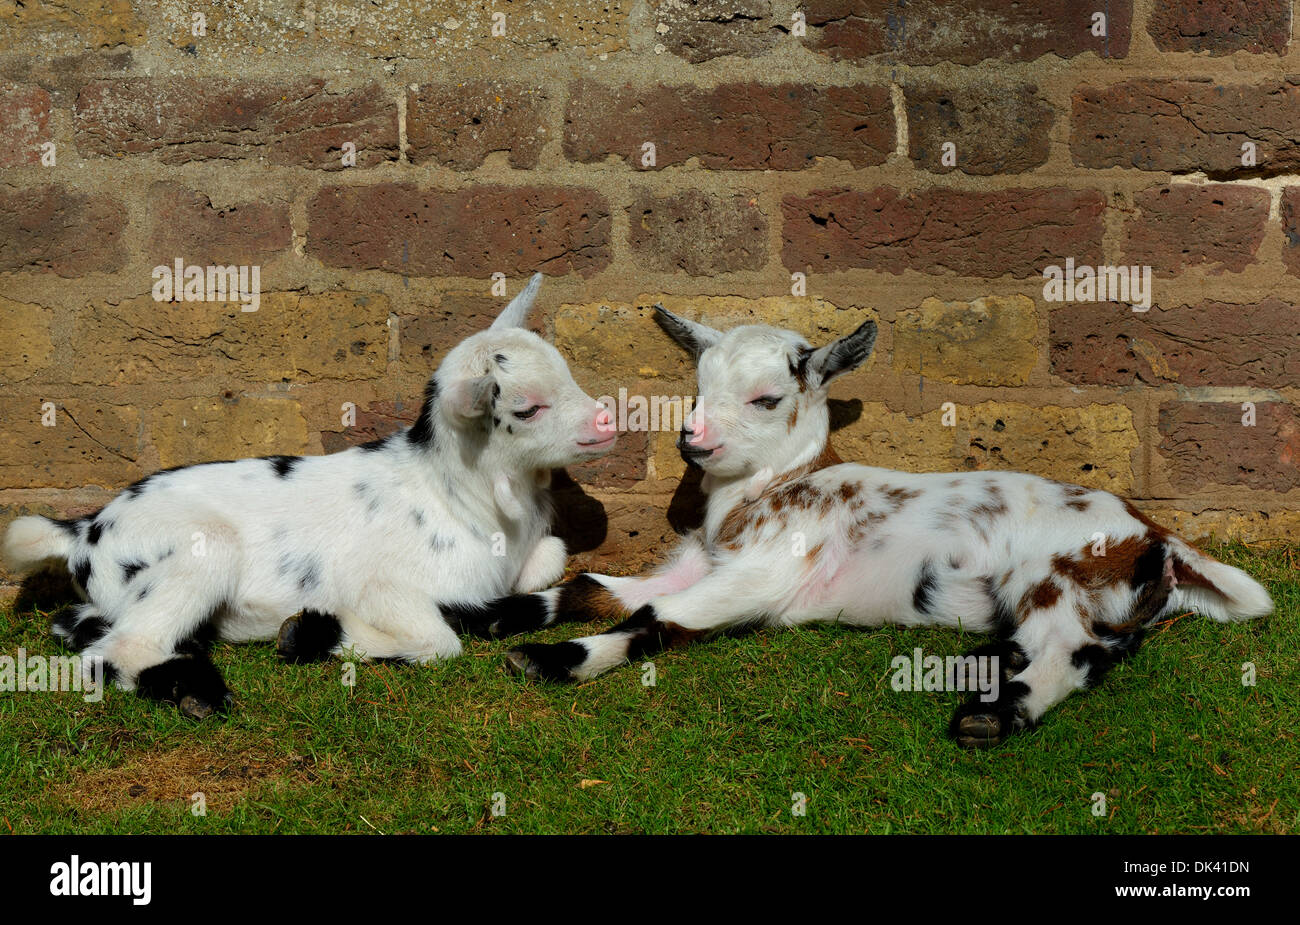 A pair of cute baby goats enjoying the sun Stock Photo